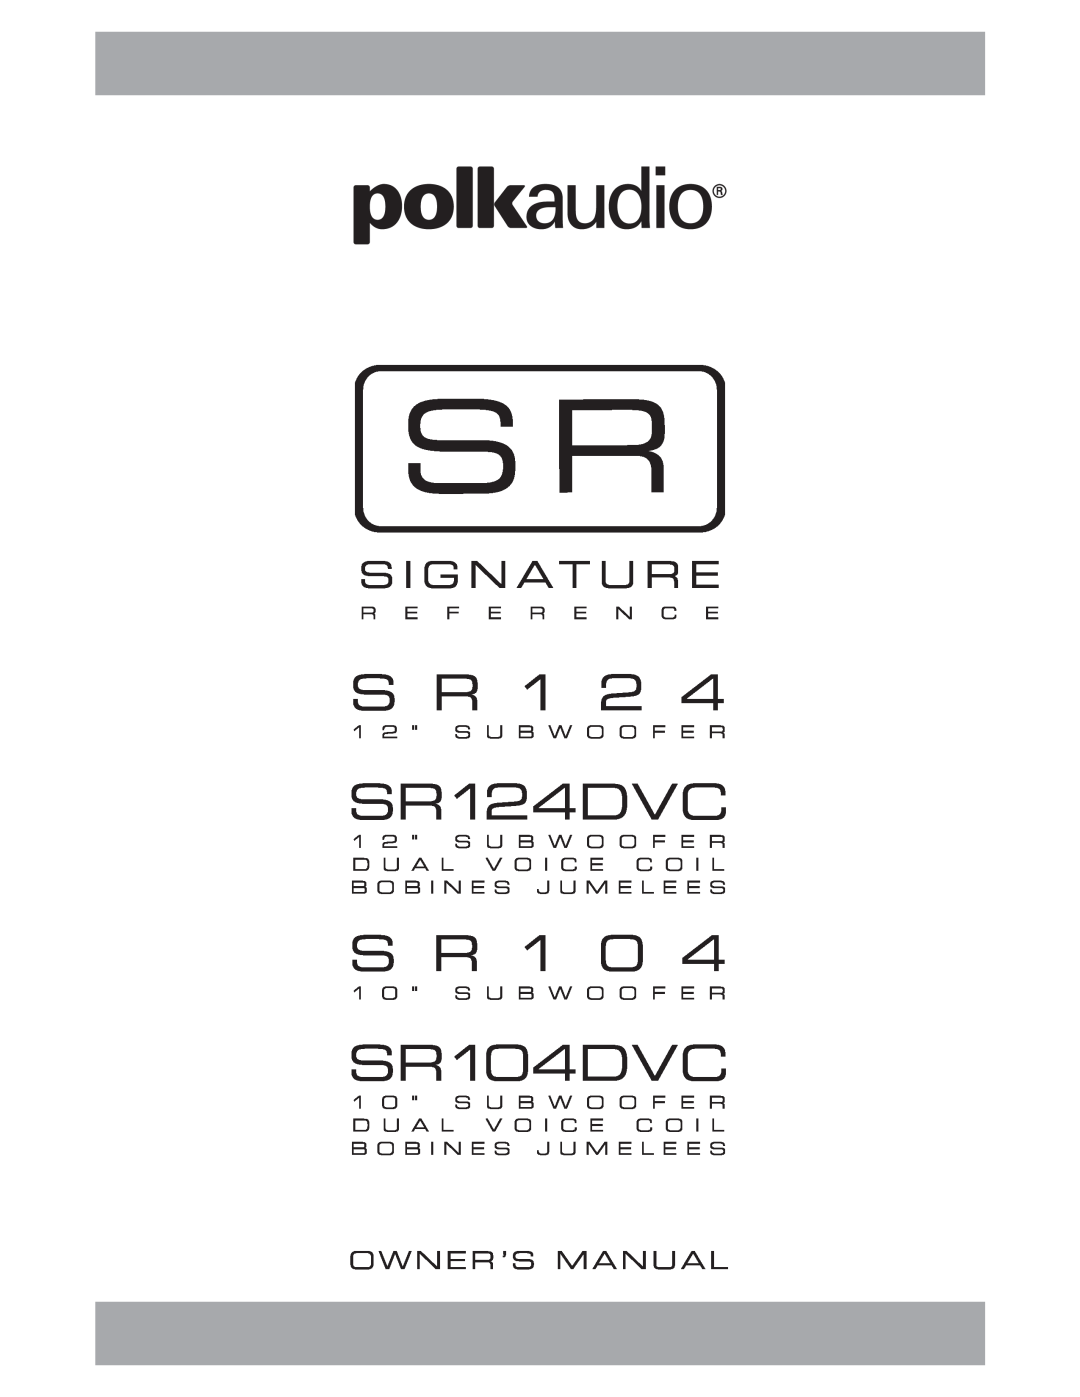 Polk Audio SR 124 owner manual S R, SR124DVC, SR104DVC, Owner ’S Manual, 1 2 S U B W O O F E R, 1 0 S U B W O O F E R 